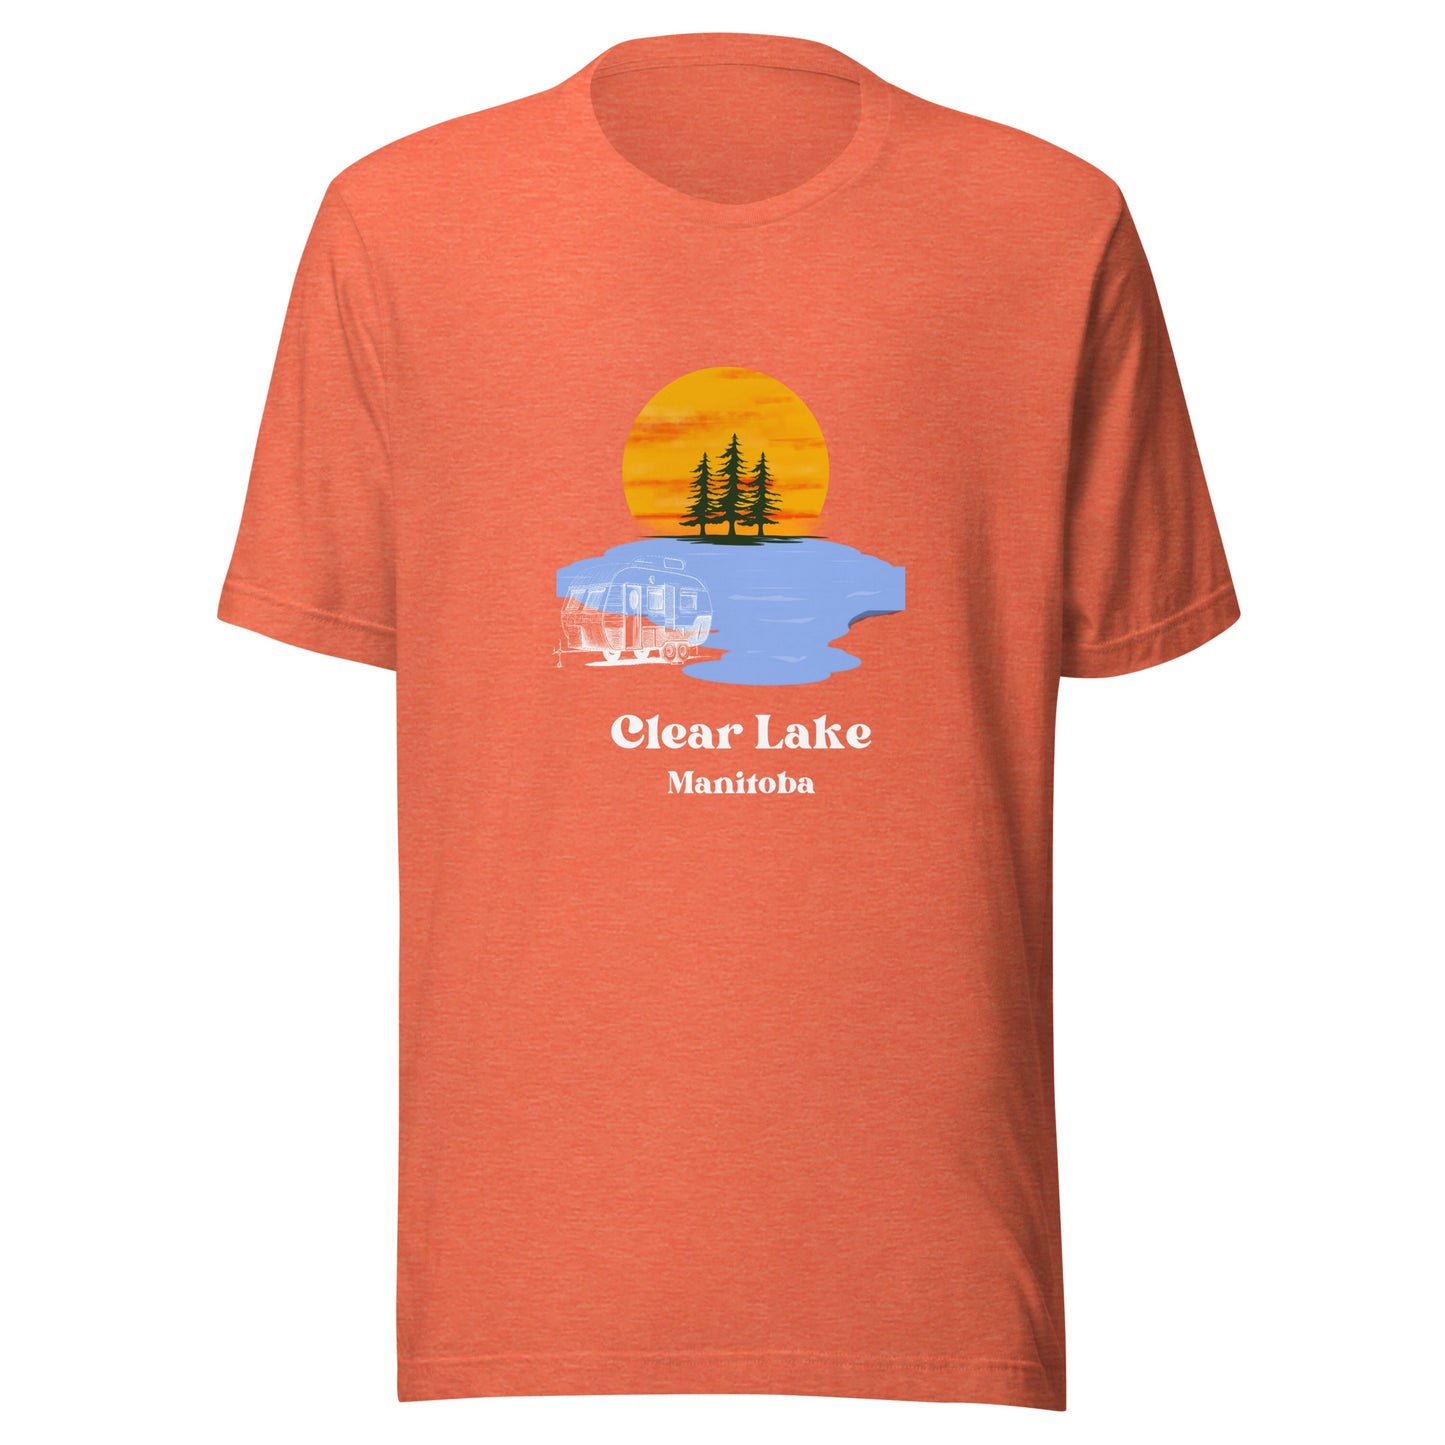 Clear Lake, MB - T-Shirt Camper